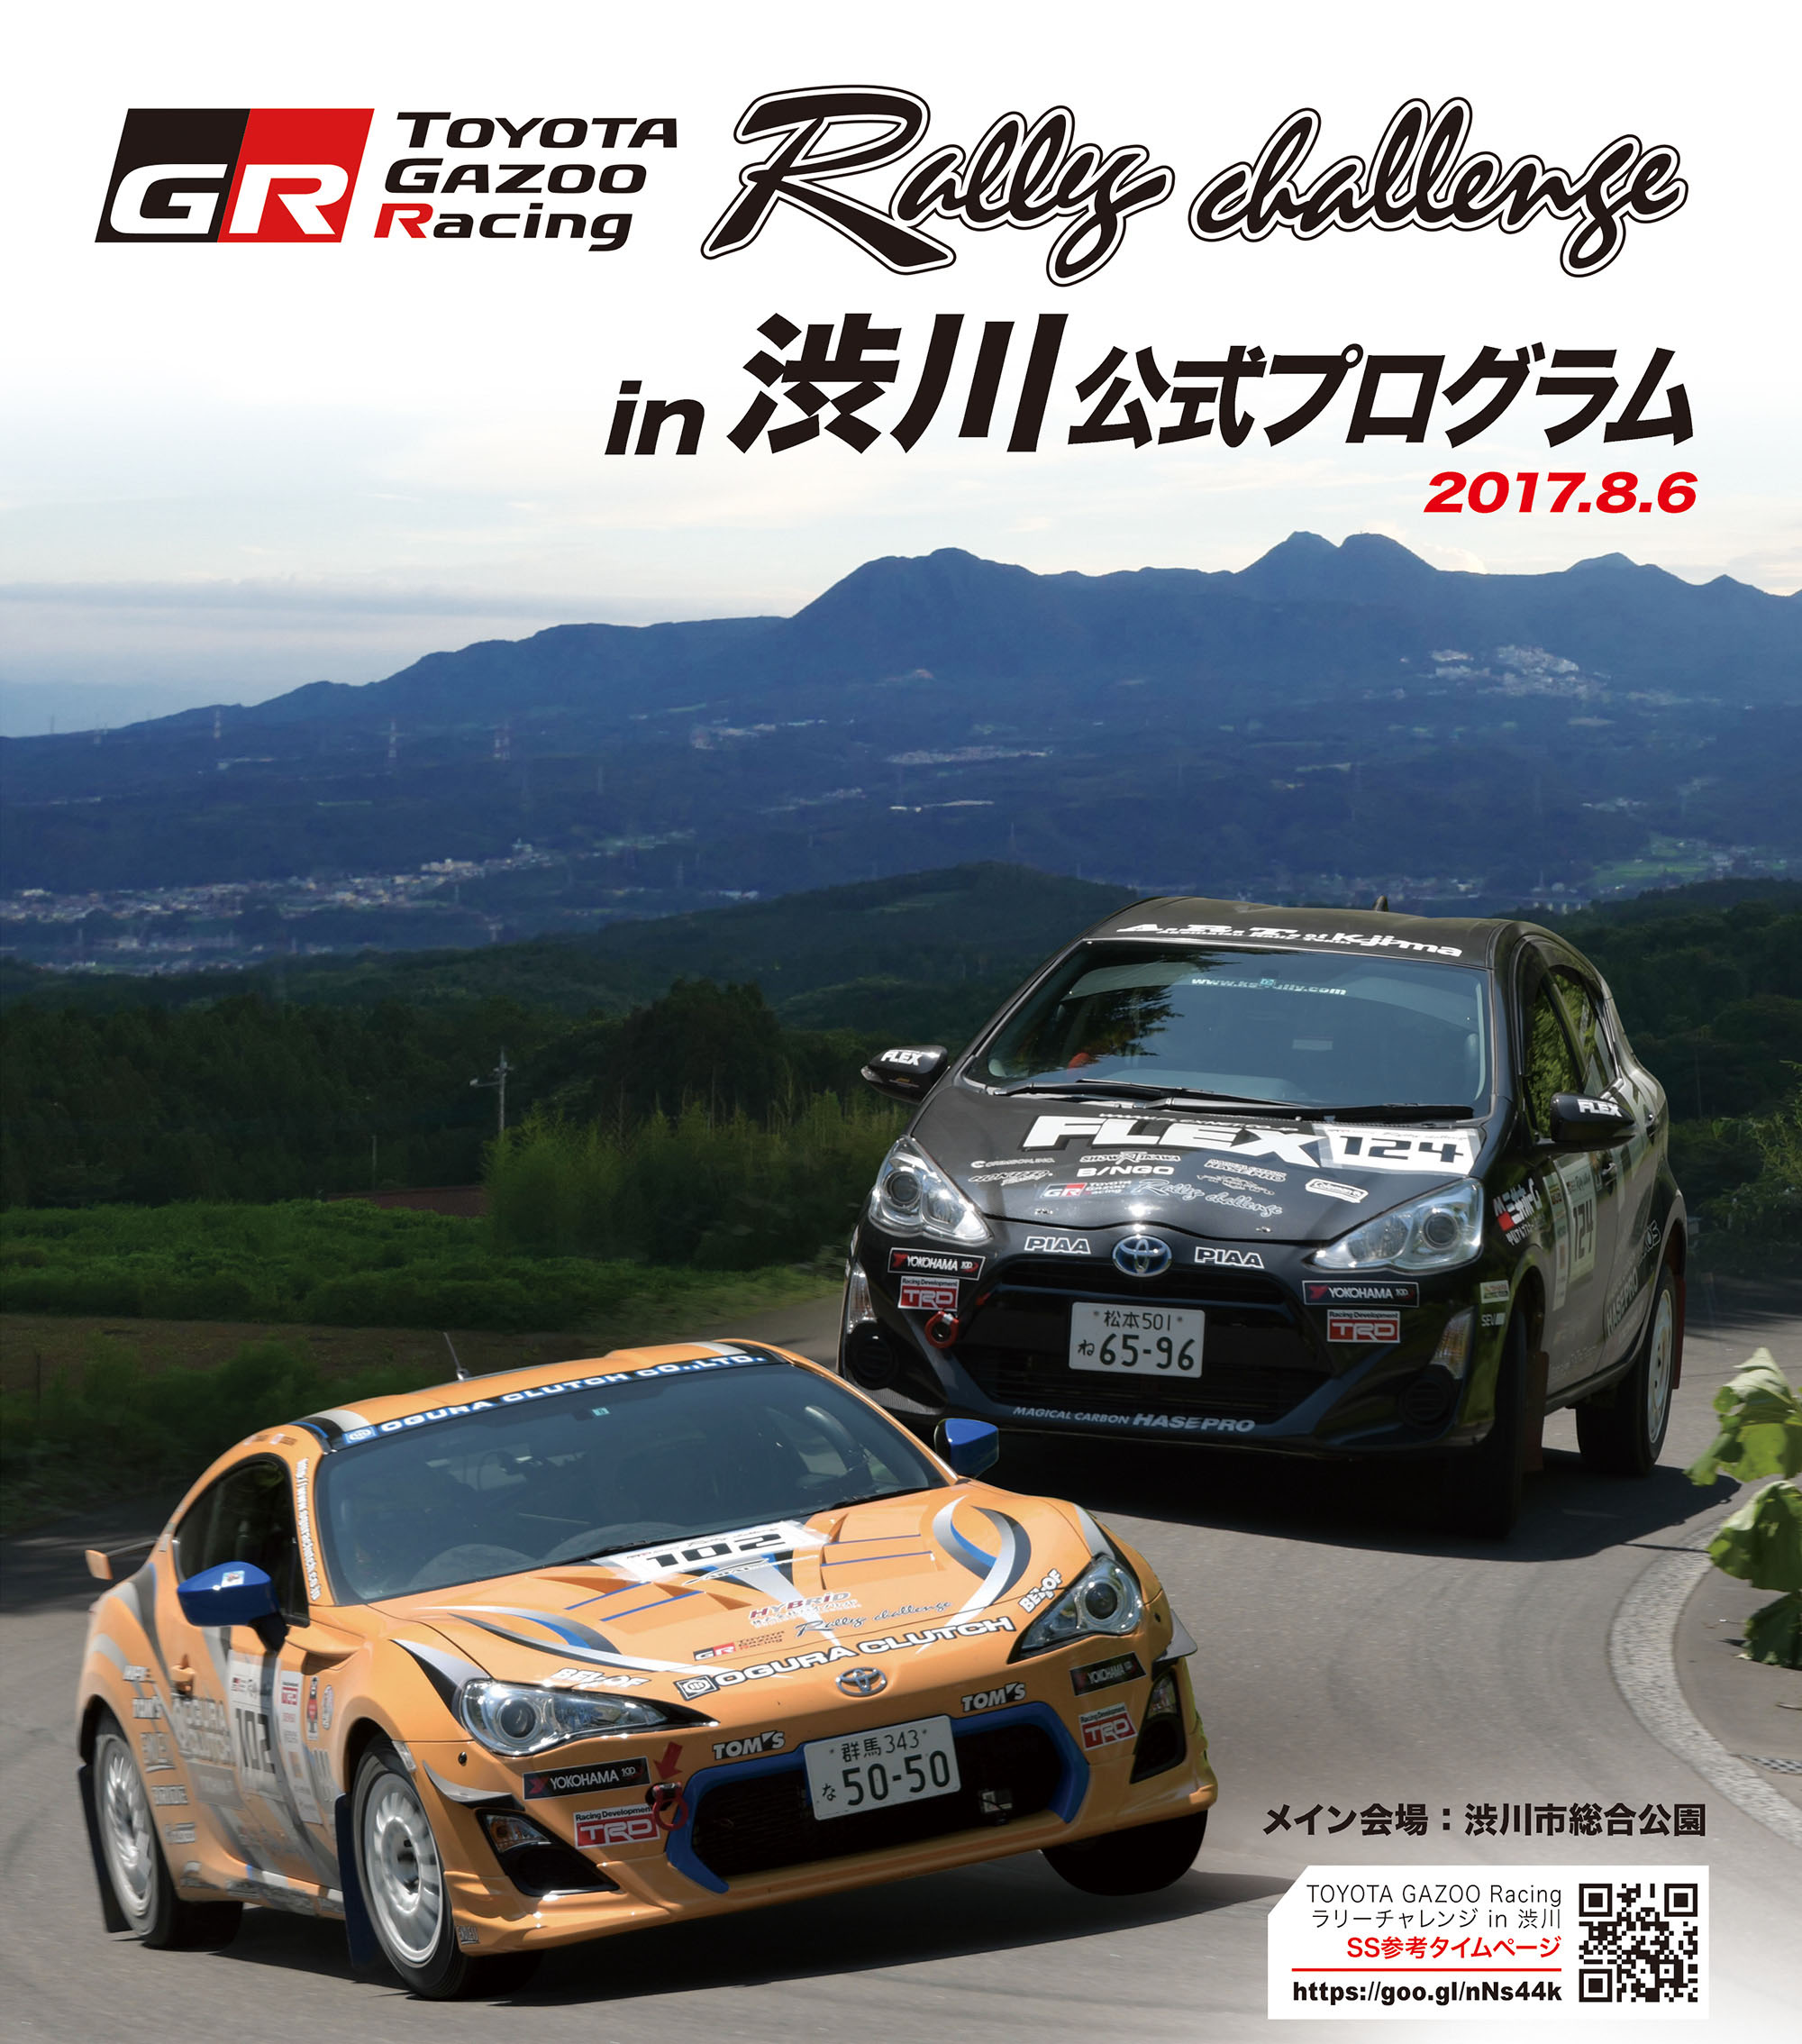 Rally challenge in渋川公式プログラム 2017.8.6